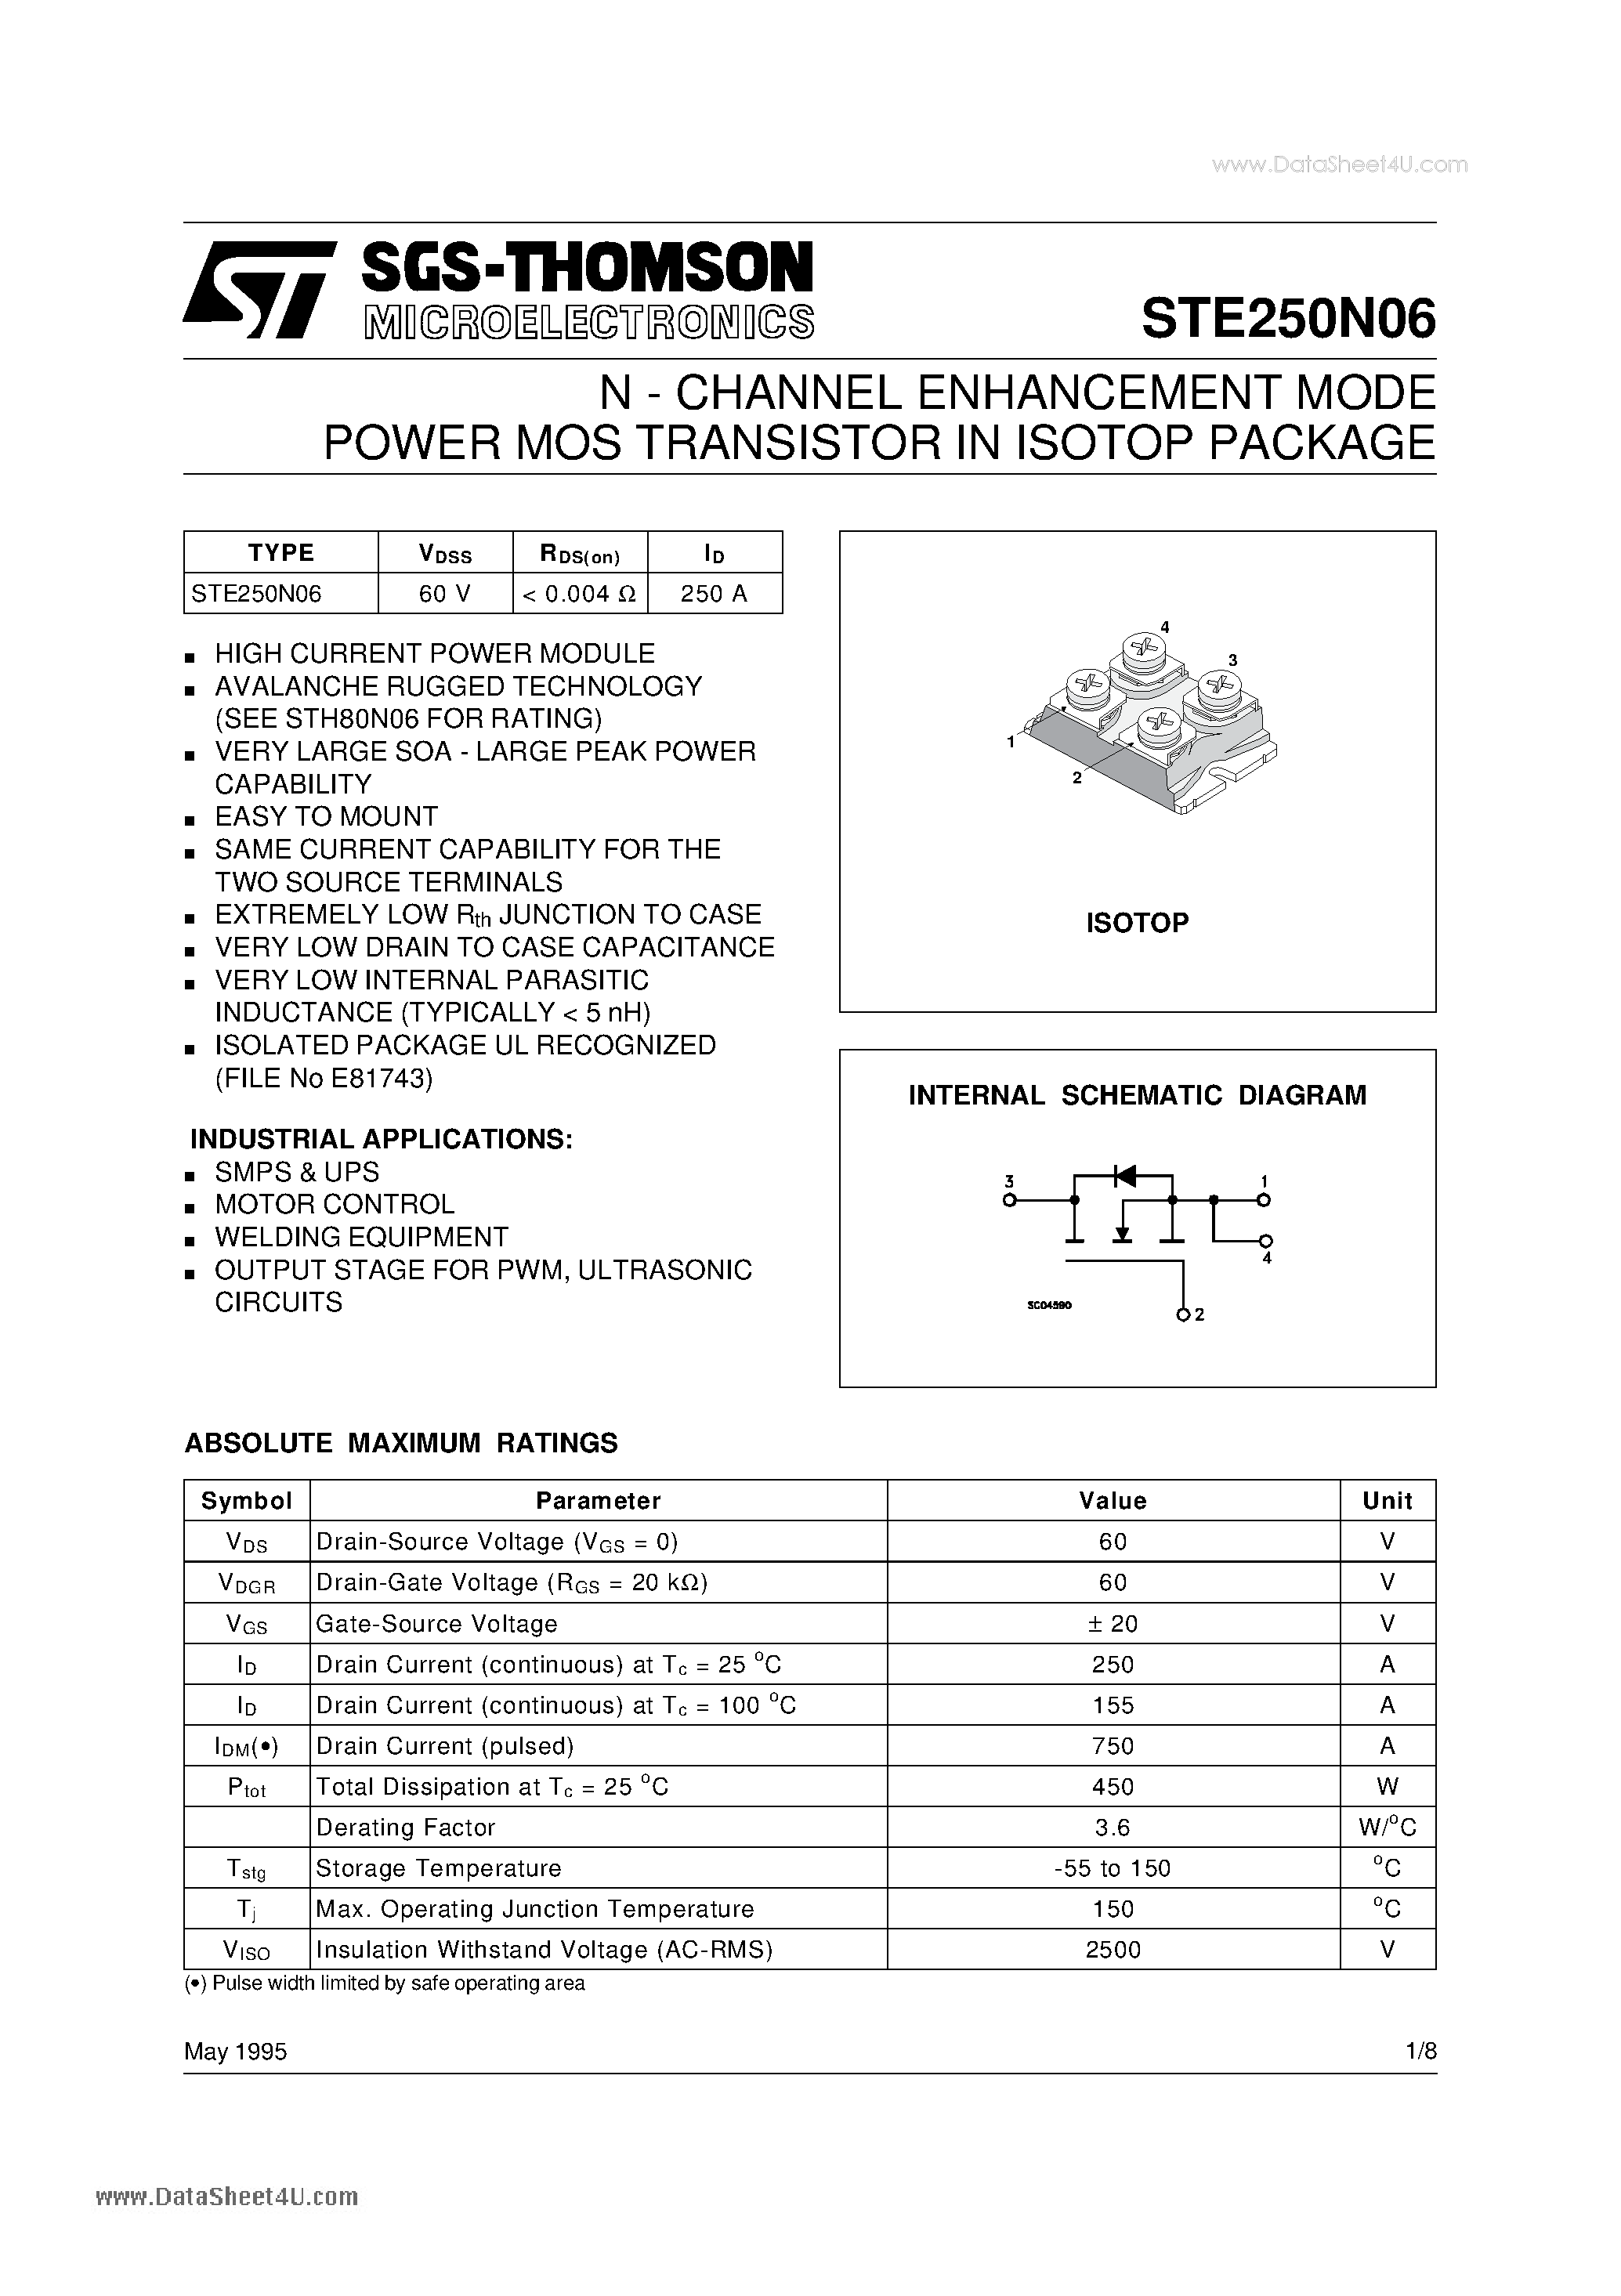 Datasheet STE250N06 - N - CHANNEL ENHANCEMENT MODE POWER MOS TRANSISTOR page 1